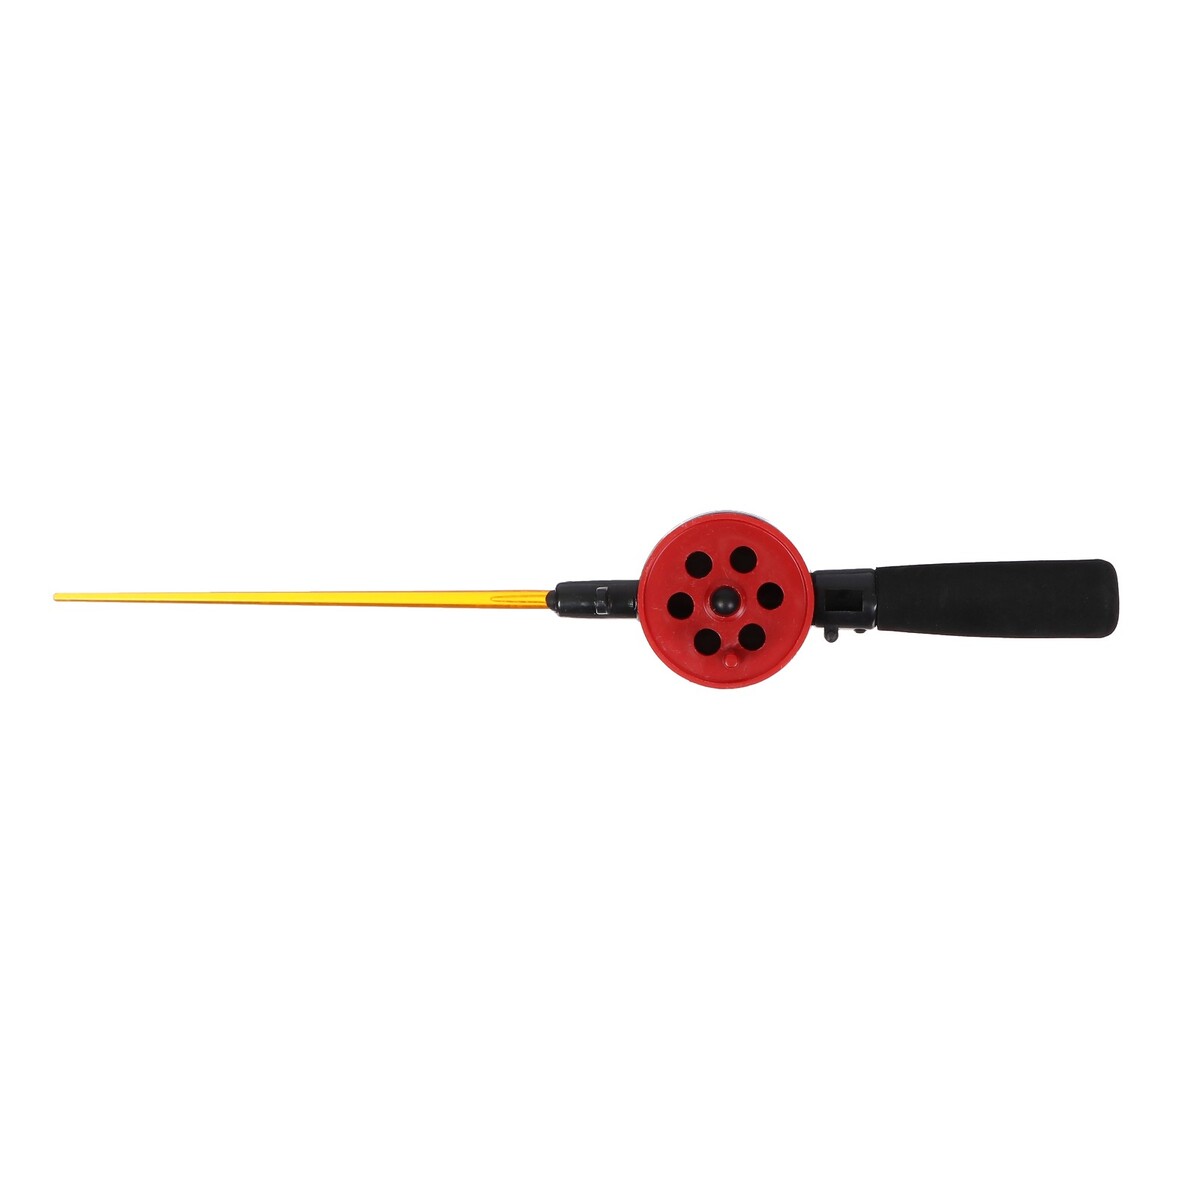 фото Удочка зимняя, ручка неопрен, диаметр катушки 5.5 см, катушка красная, hfb-8 no brand